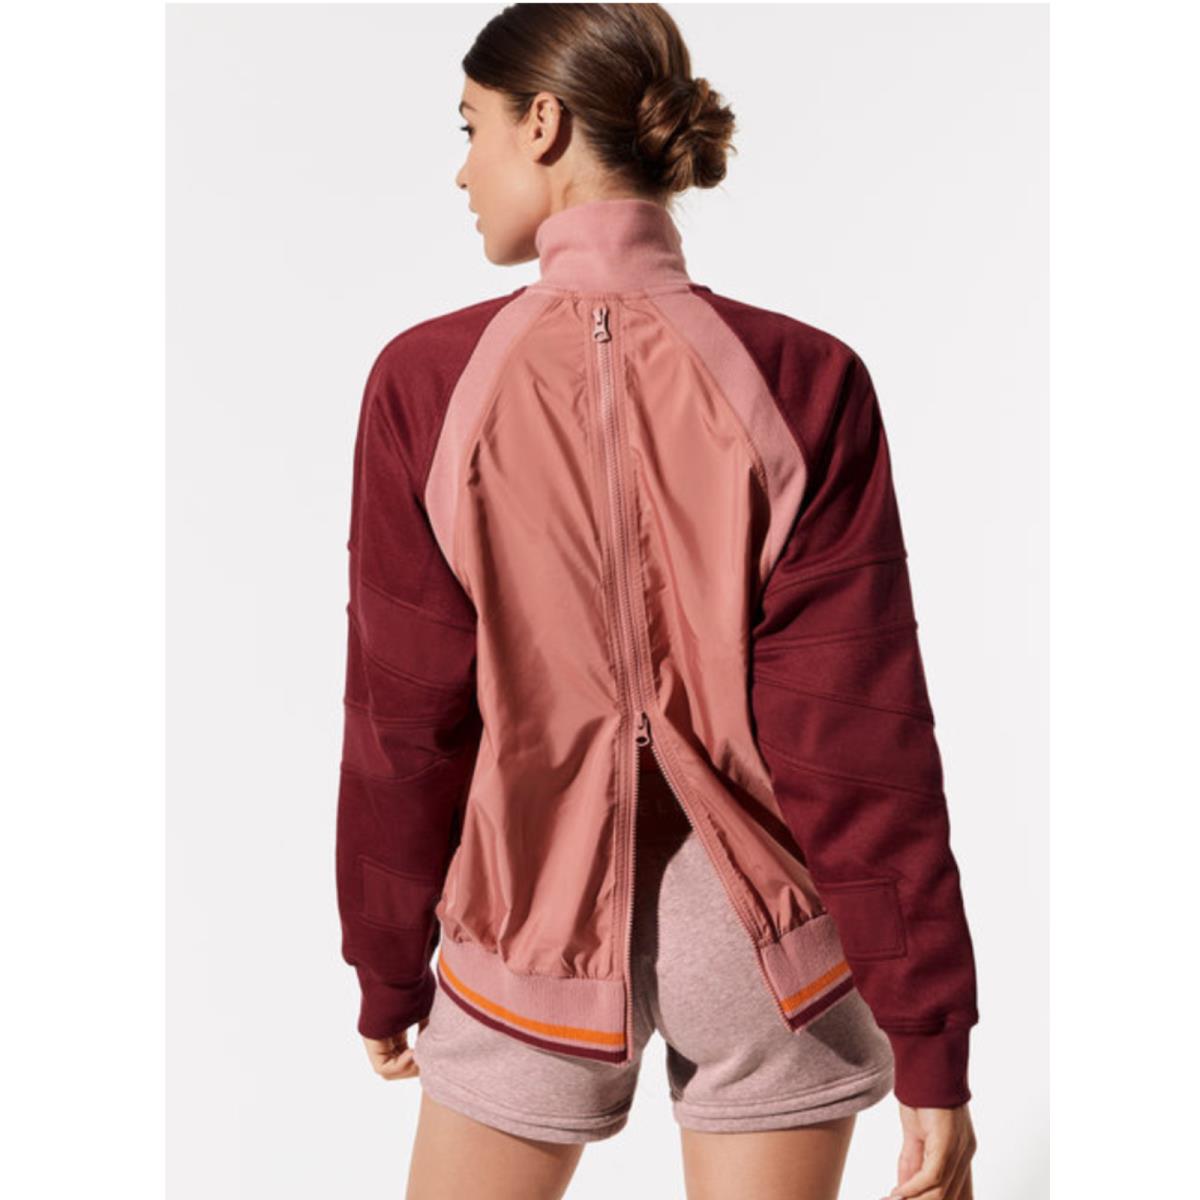 Adidas by Stella Mccartney Womens Training Track Top Jacket Raw Pink Maroon Sz M